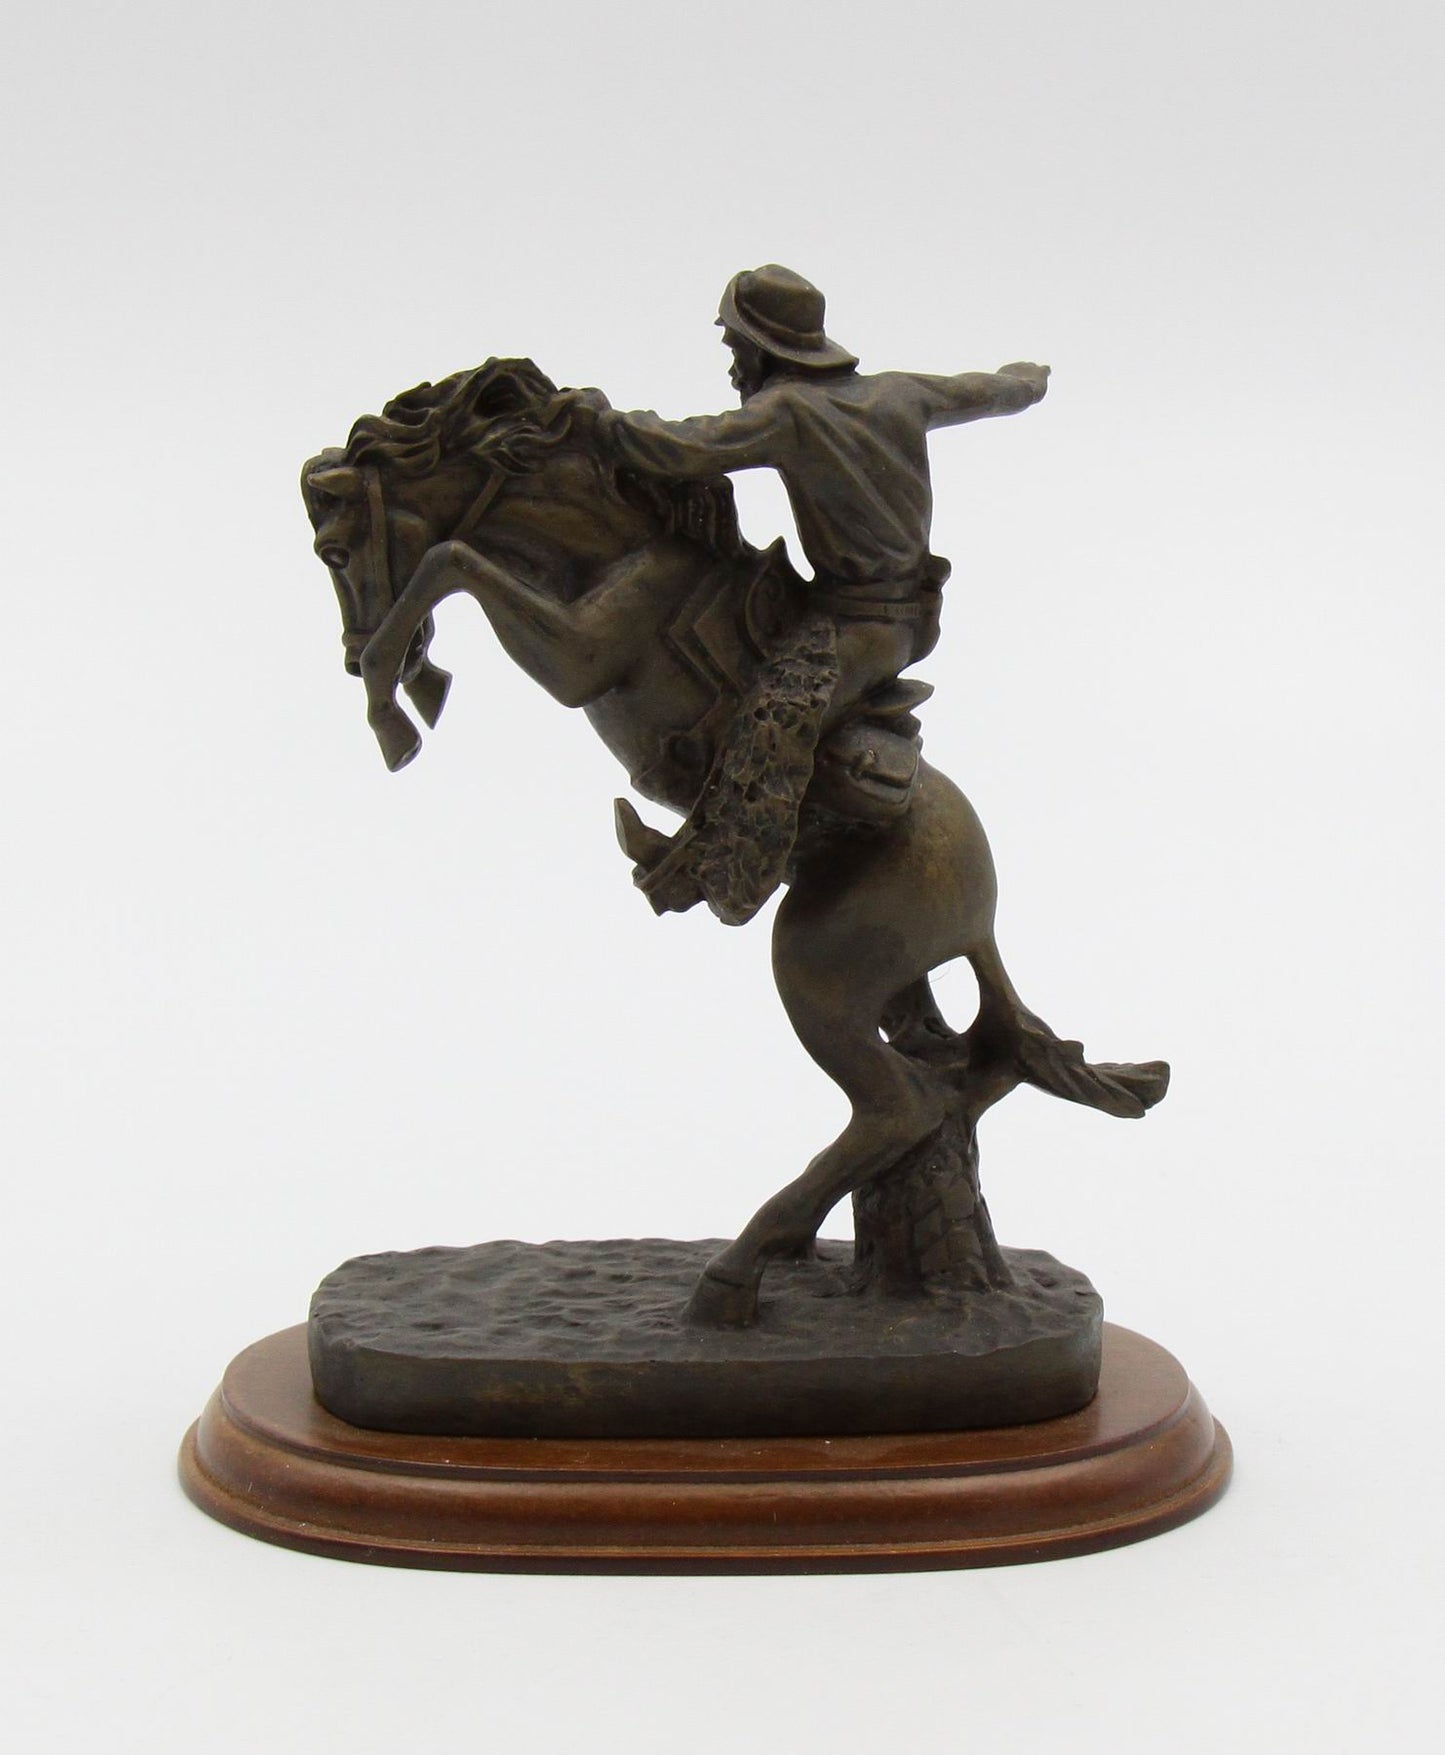 Cowboy Riding Horse Figurine, Home Décor, Gift for Him, Gift for Dad, Gift for Son, Office Décor, Game Room Decor